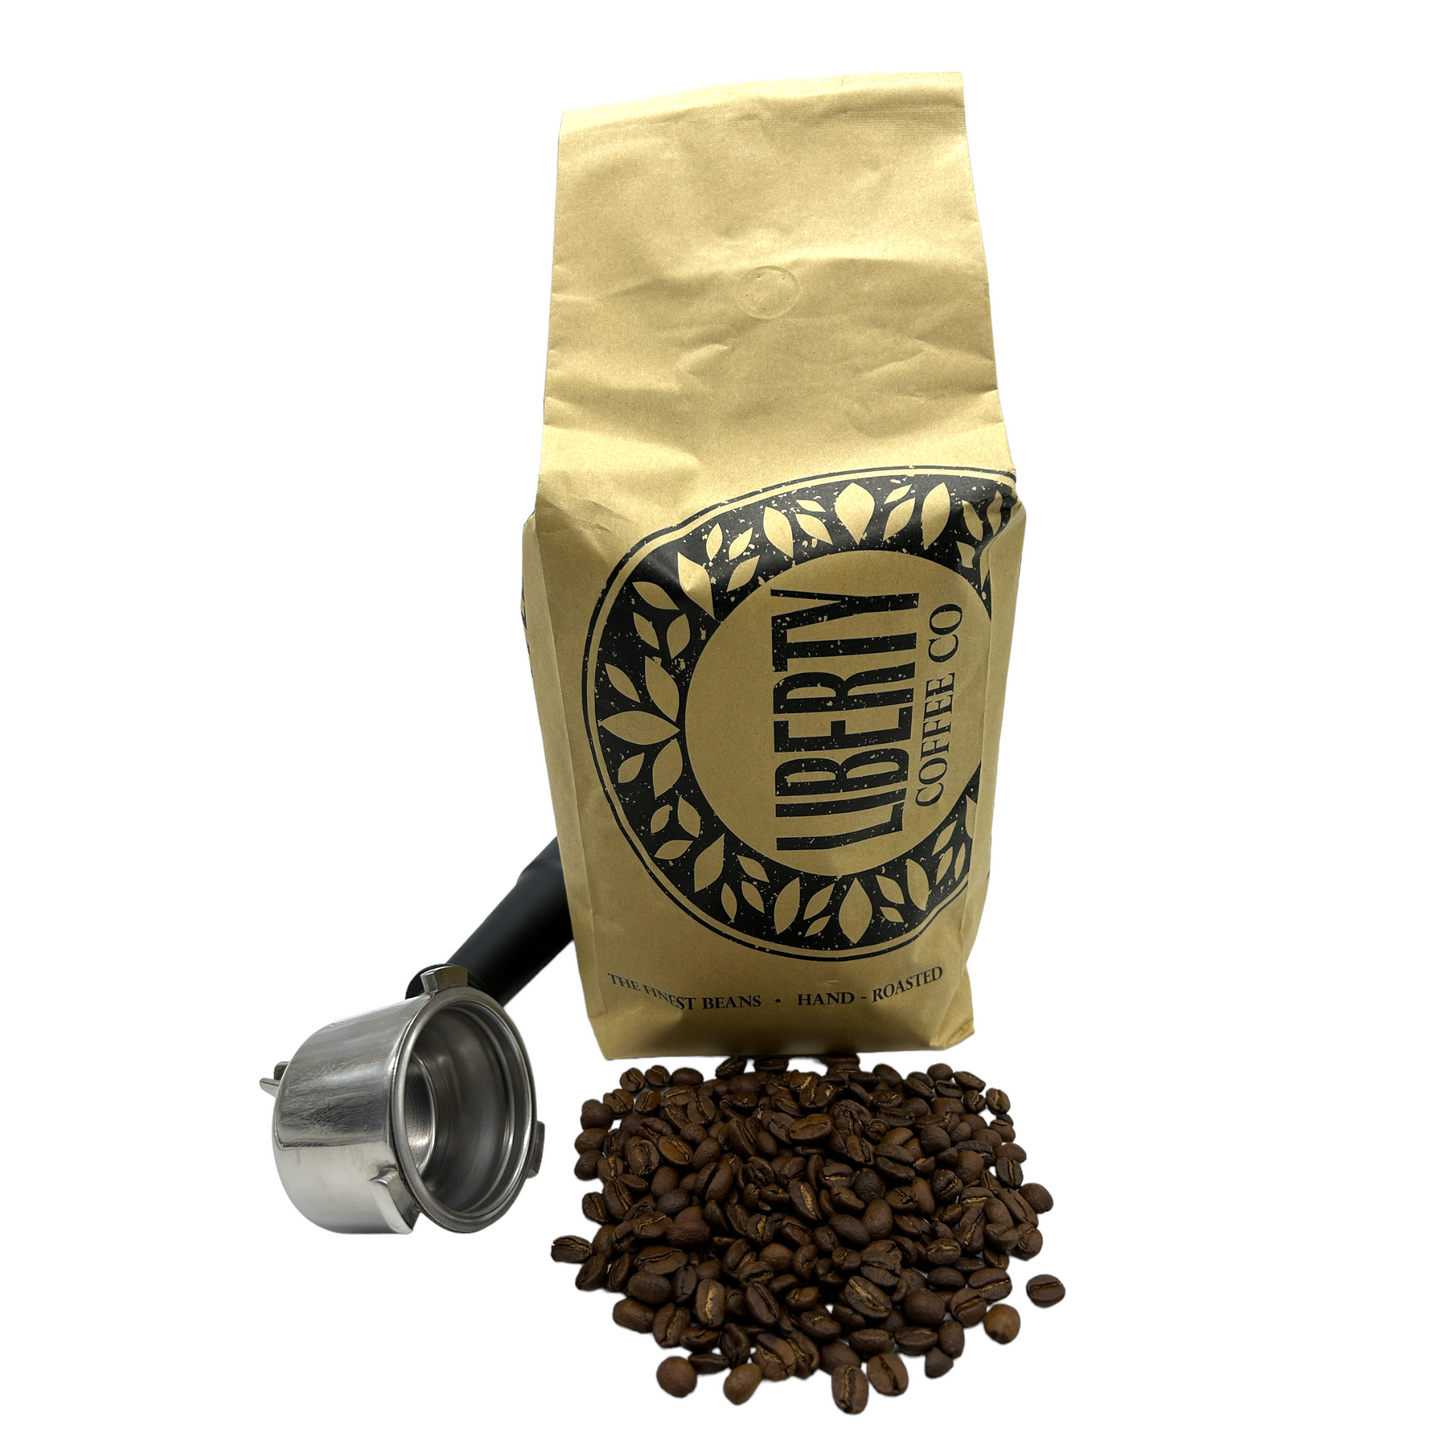 Coffee Beans - La Terra SCA 83.75